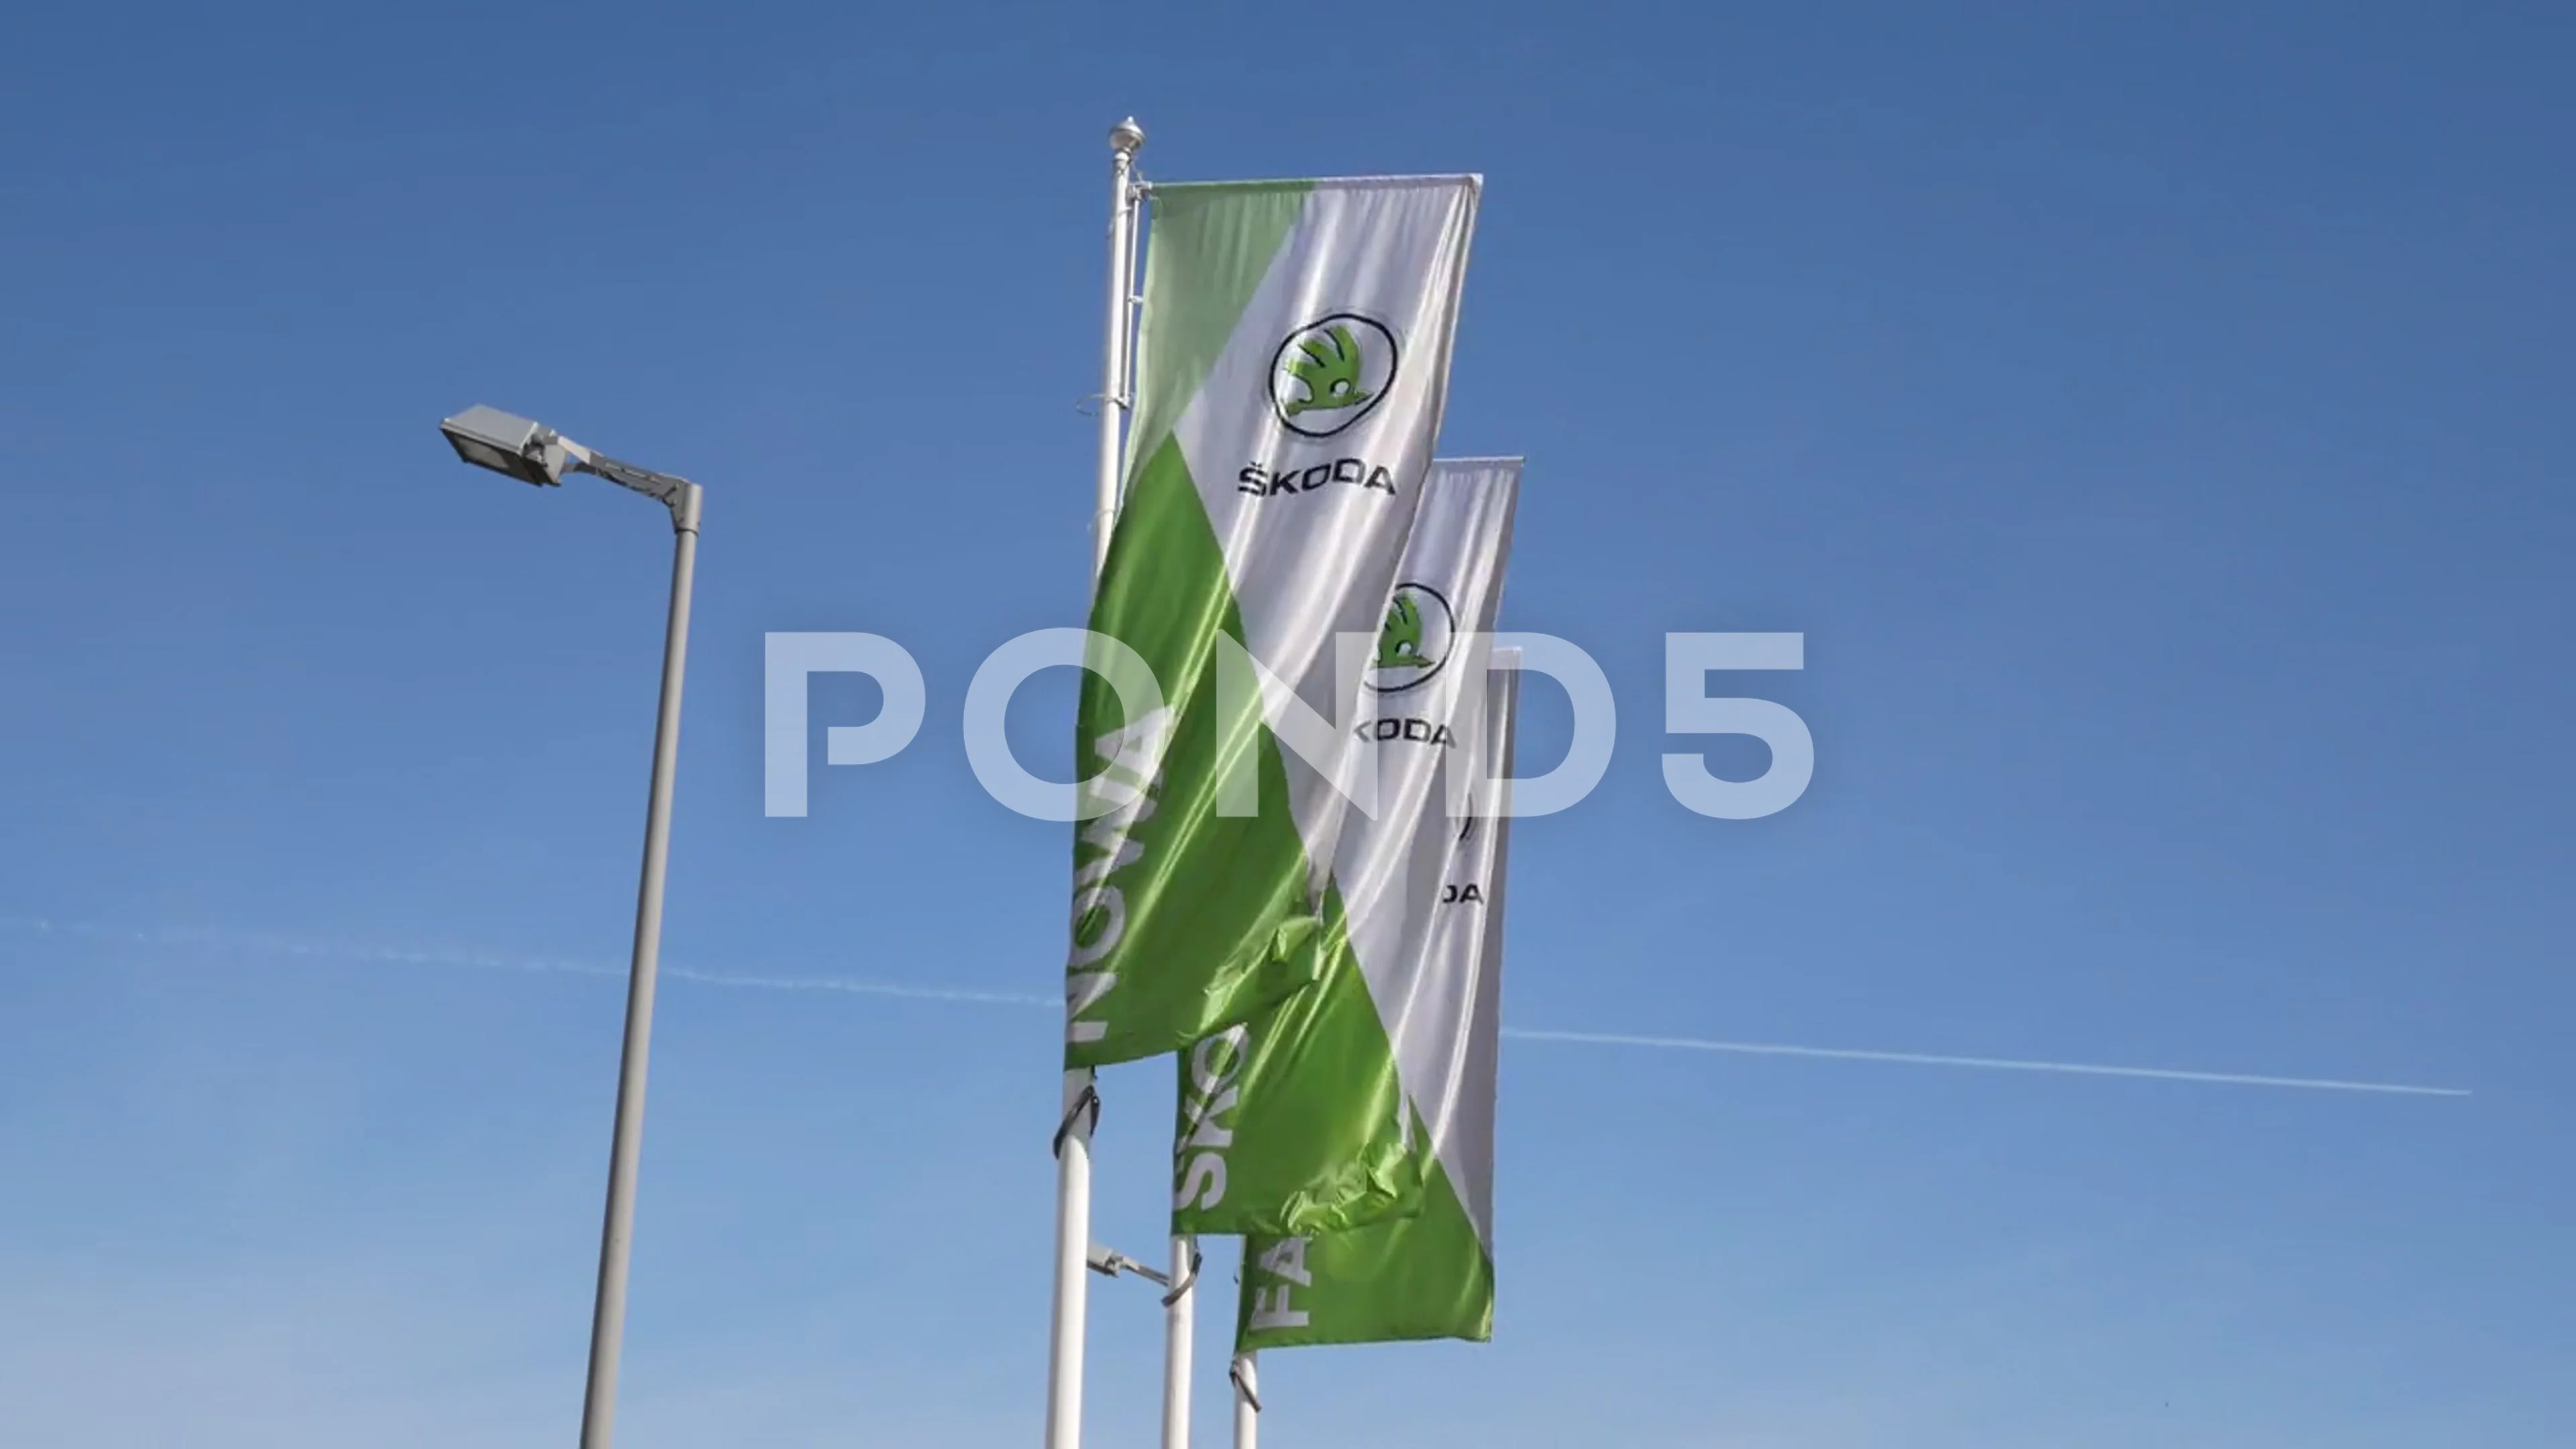 Waving Flag Estee Lauder Companies Logo Stock Footage Video (100%  Royalty-free) 27535525